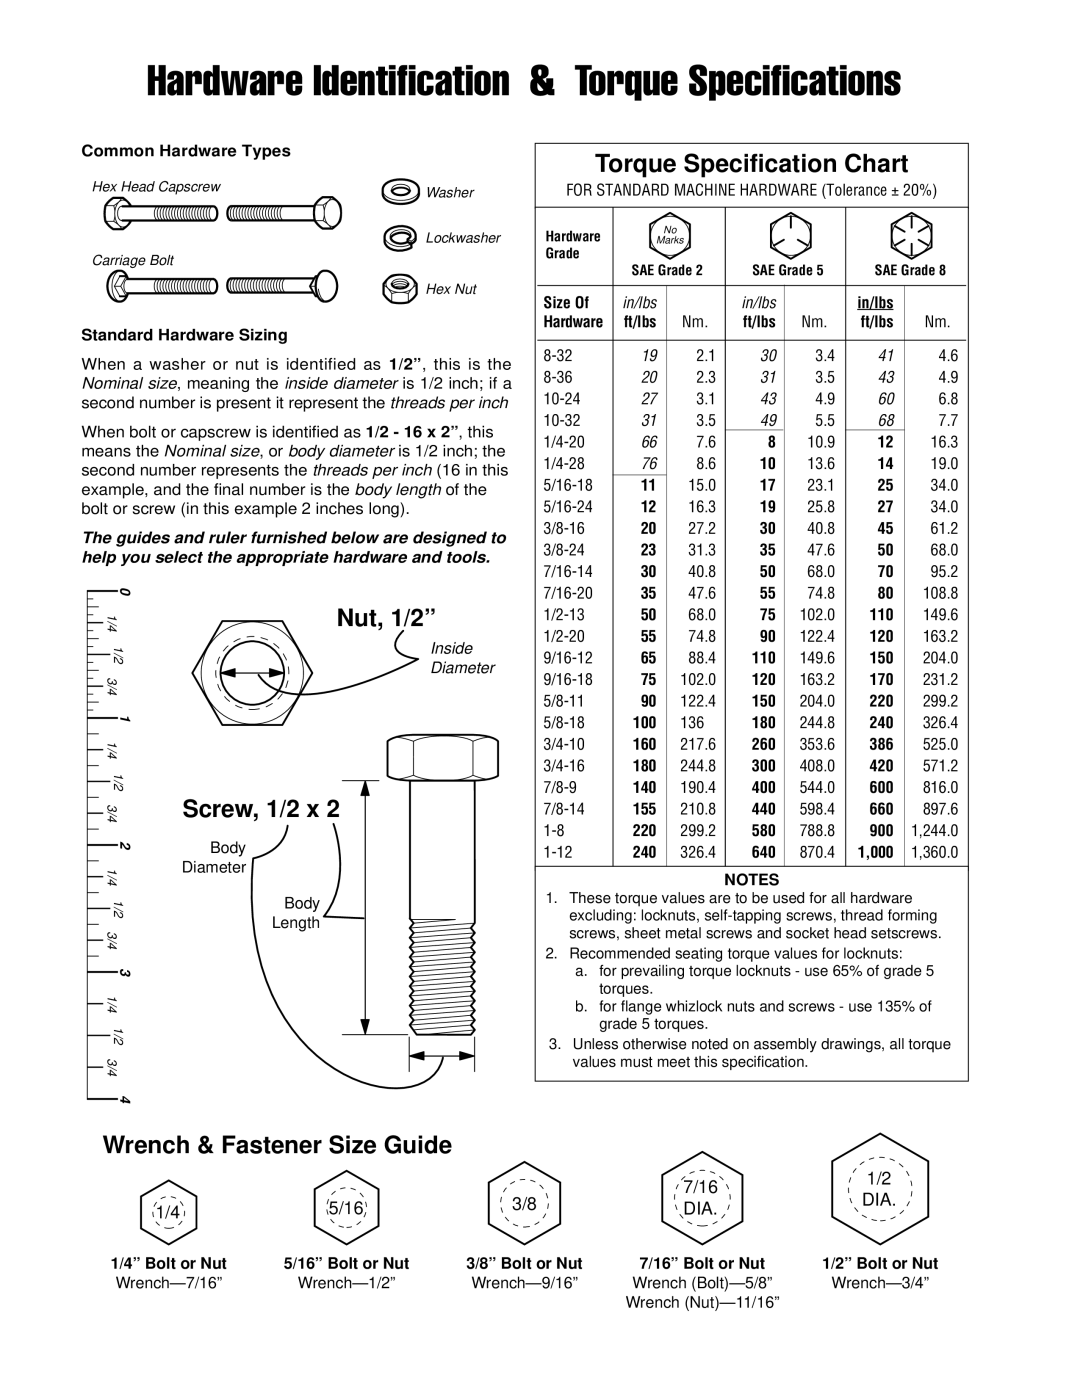 Snapper 2508 manual Hardware Identification & Torque Specifications, Torque Specification Chart, Nut, 1/2”, Screw, 1/2 x 